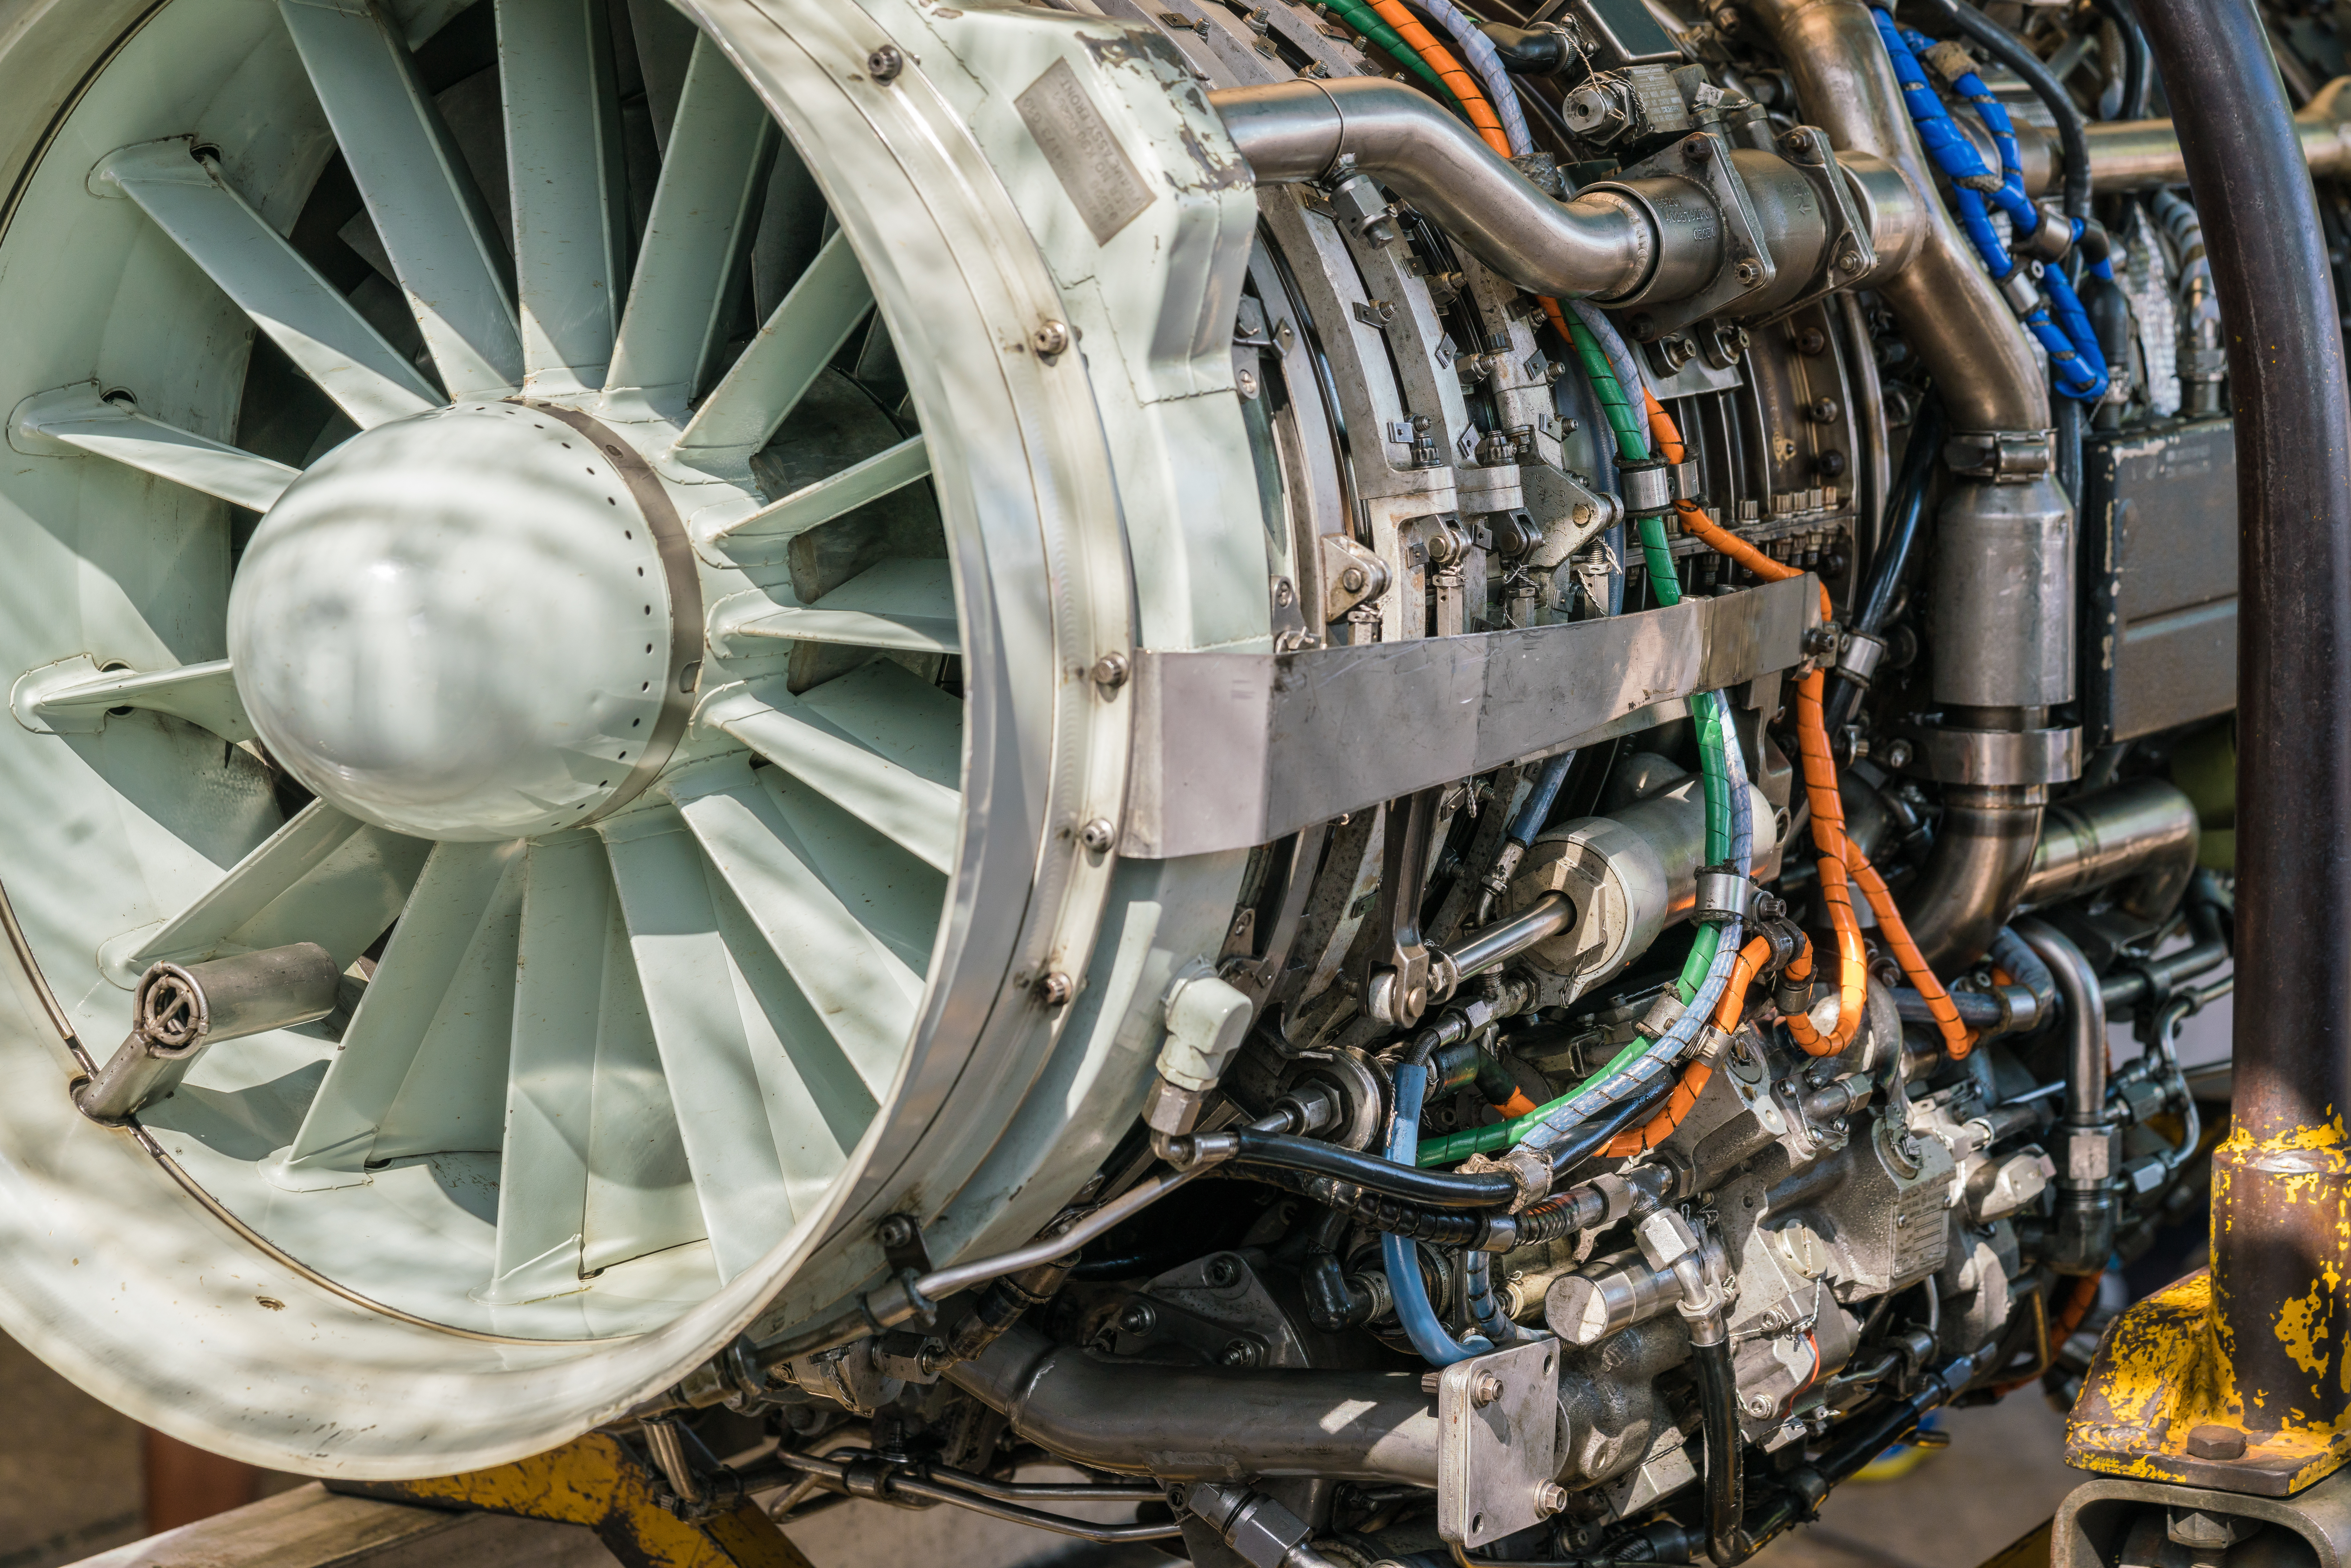 Military fighter Jet engine inside - Airplane gas turbine engine detail - Plane rotor under heavy maintenance. 